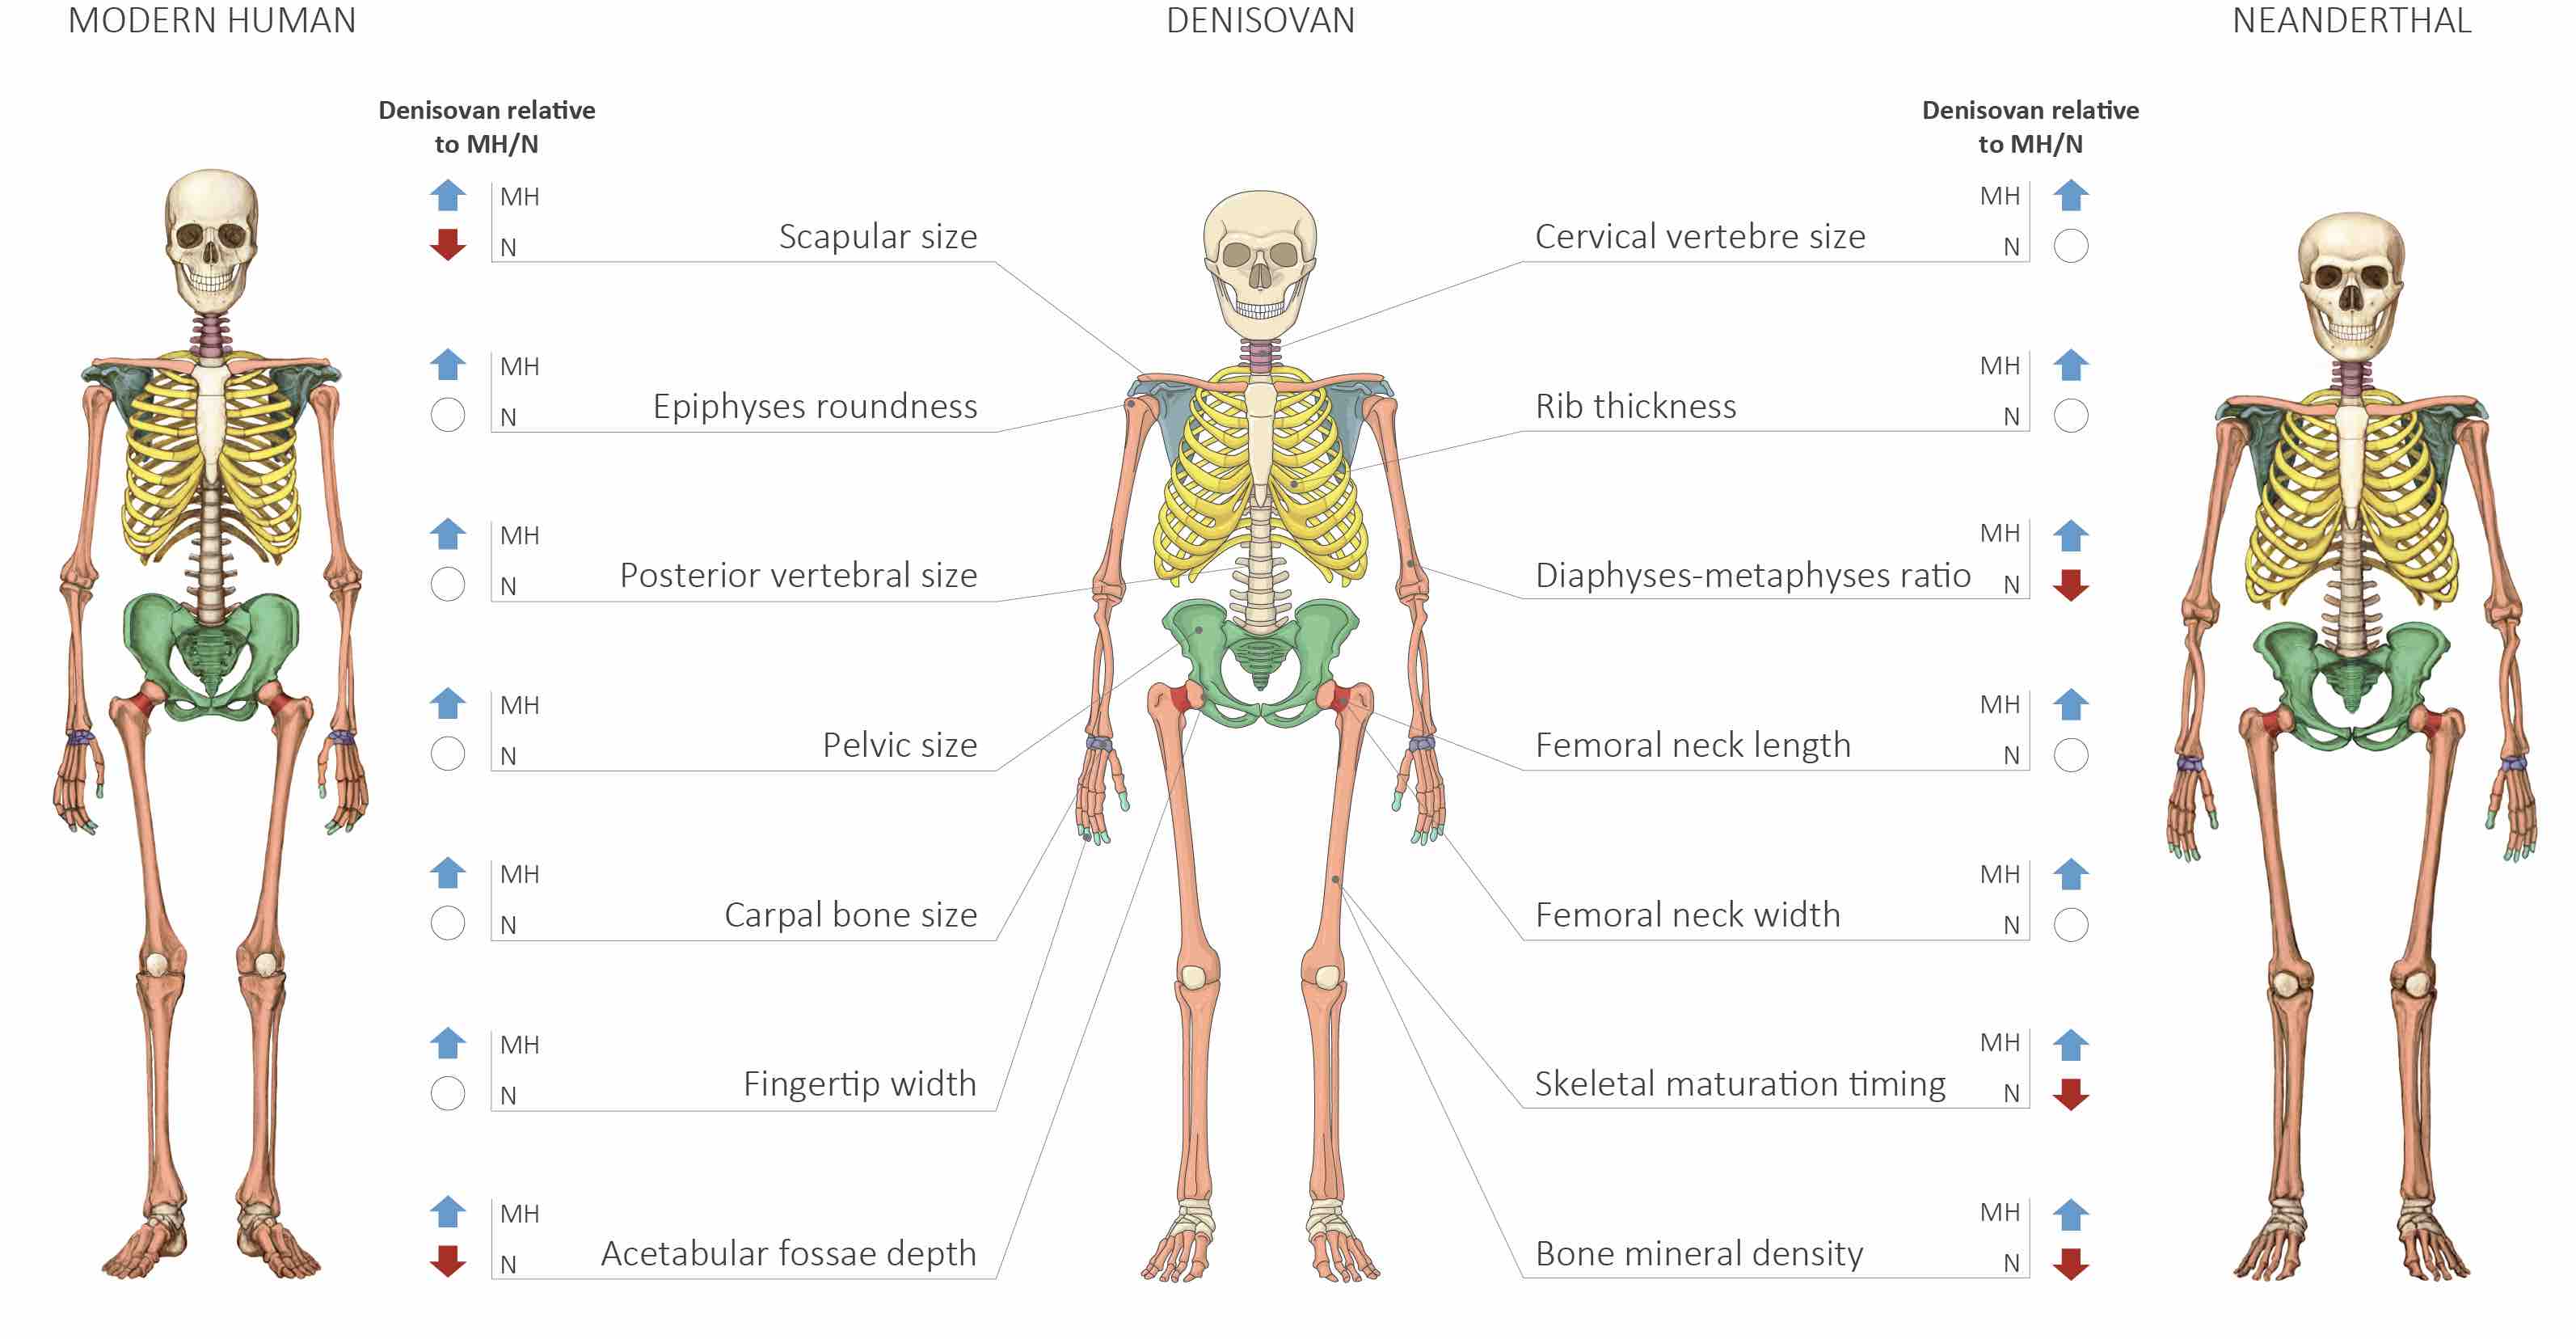 Model anatòmic d'un Humà Modern, un Neandertal i un Denissovà. (Crèdit: Maayan Harel)